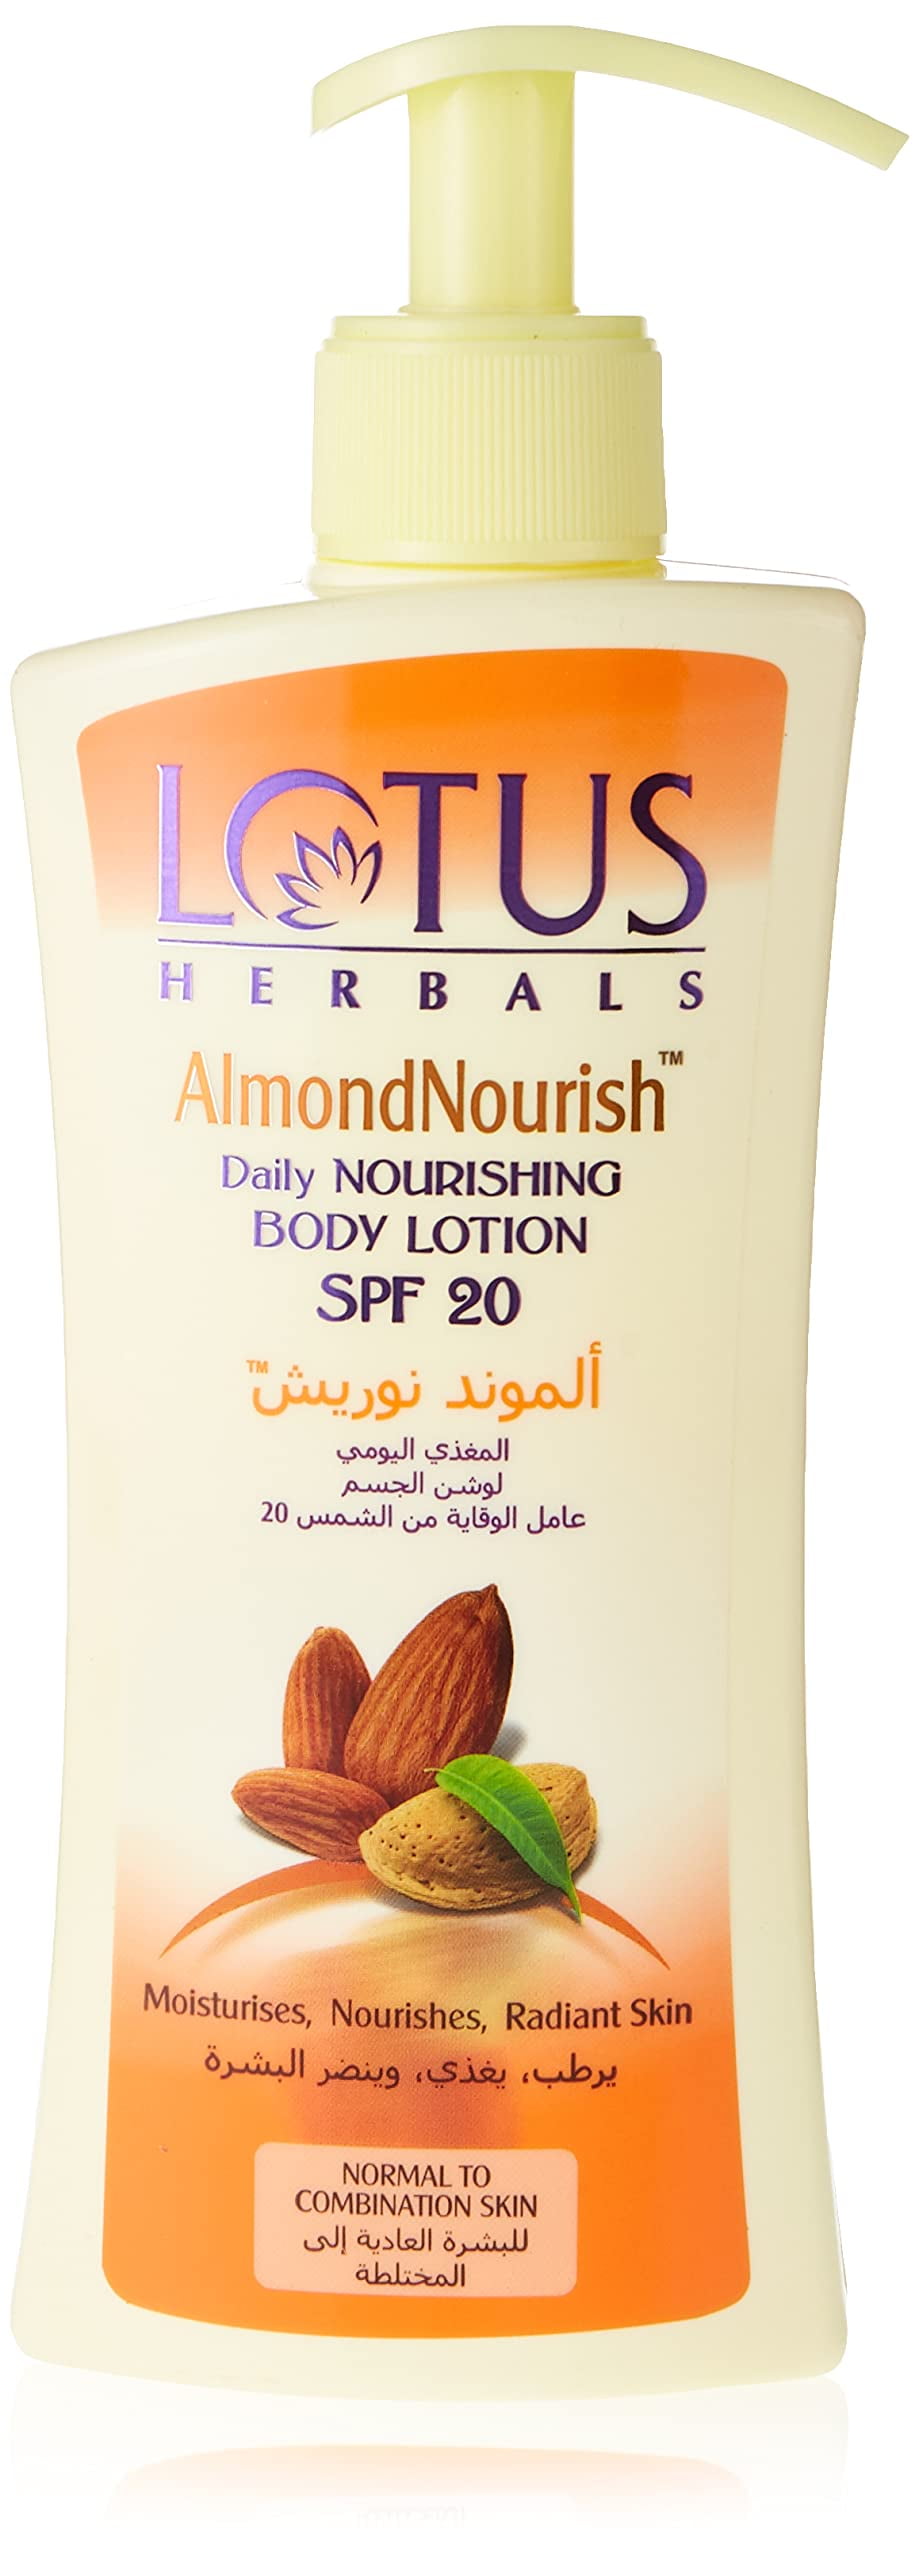 Psychologisch Assortiment Interessant Lotus Herbals Almondnourish Daily Nourishing Body Lotion | Moisturises and  Nourishes Skin | SPF 20 | For Normal / Combination Skin | 250g - Walmart.com